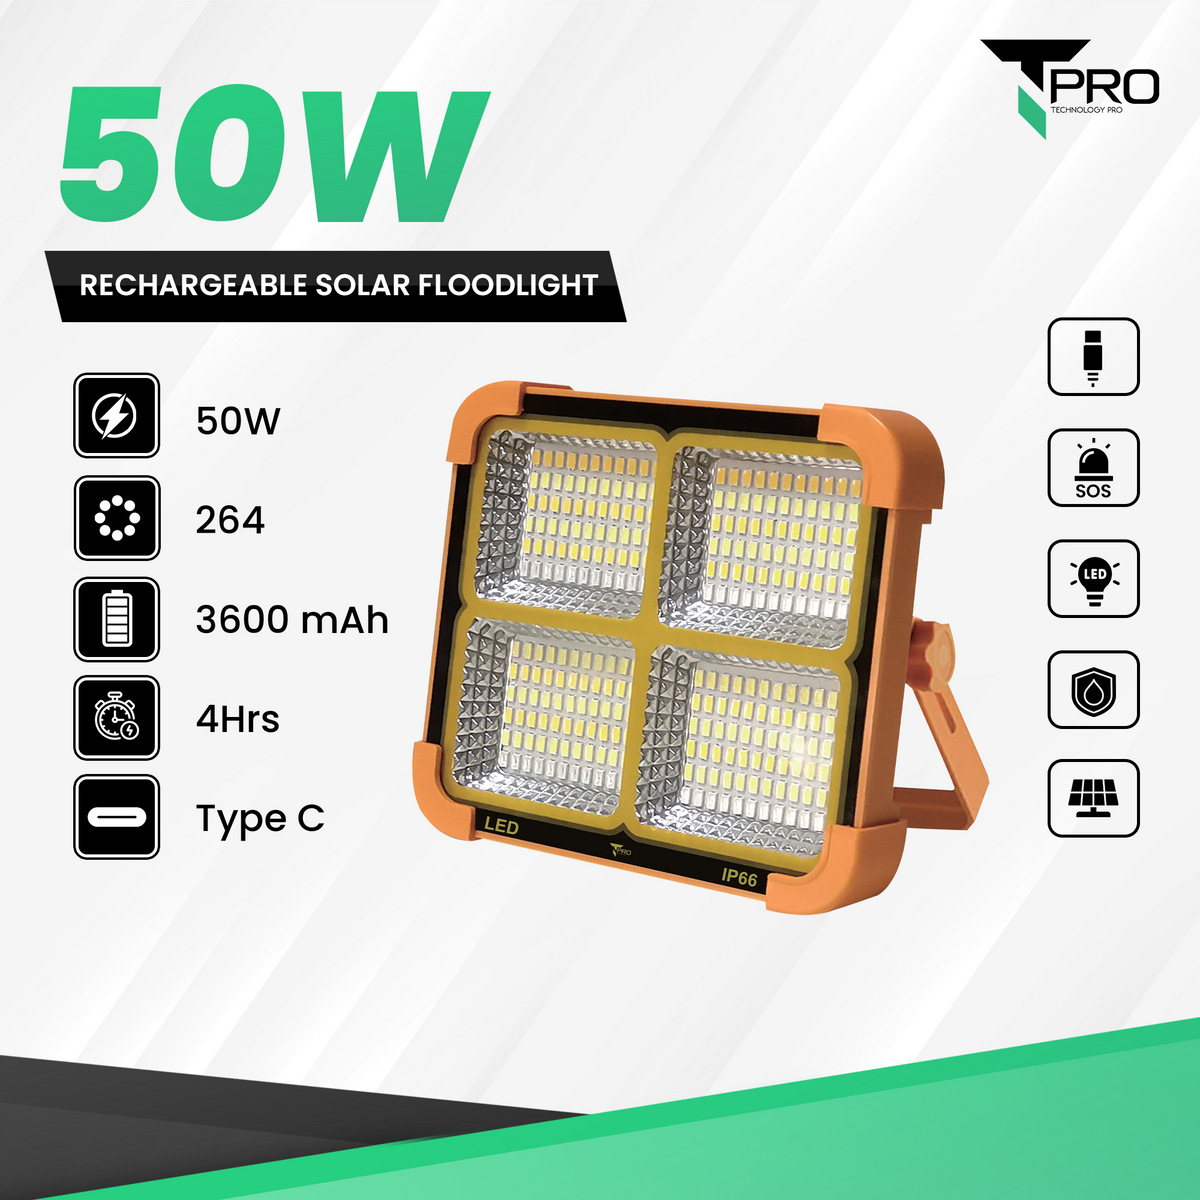 T-PRO 50W 3600MAH RECHARGABLE SOLAR FLOODLIGHT (IP66 WATERPROOF)